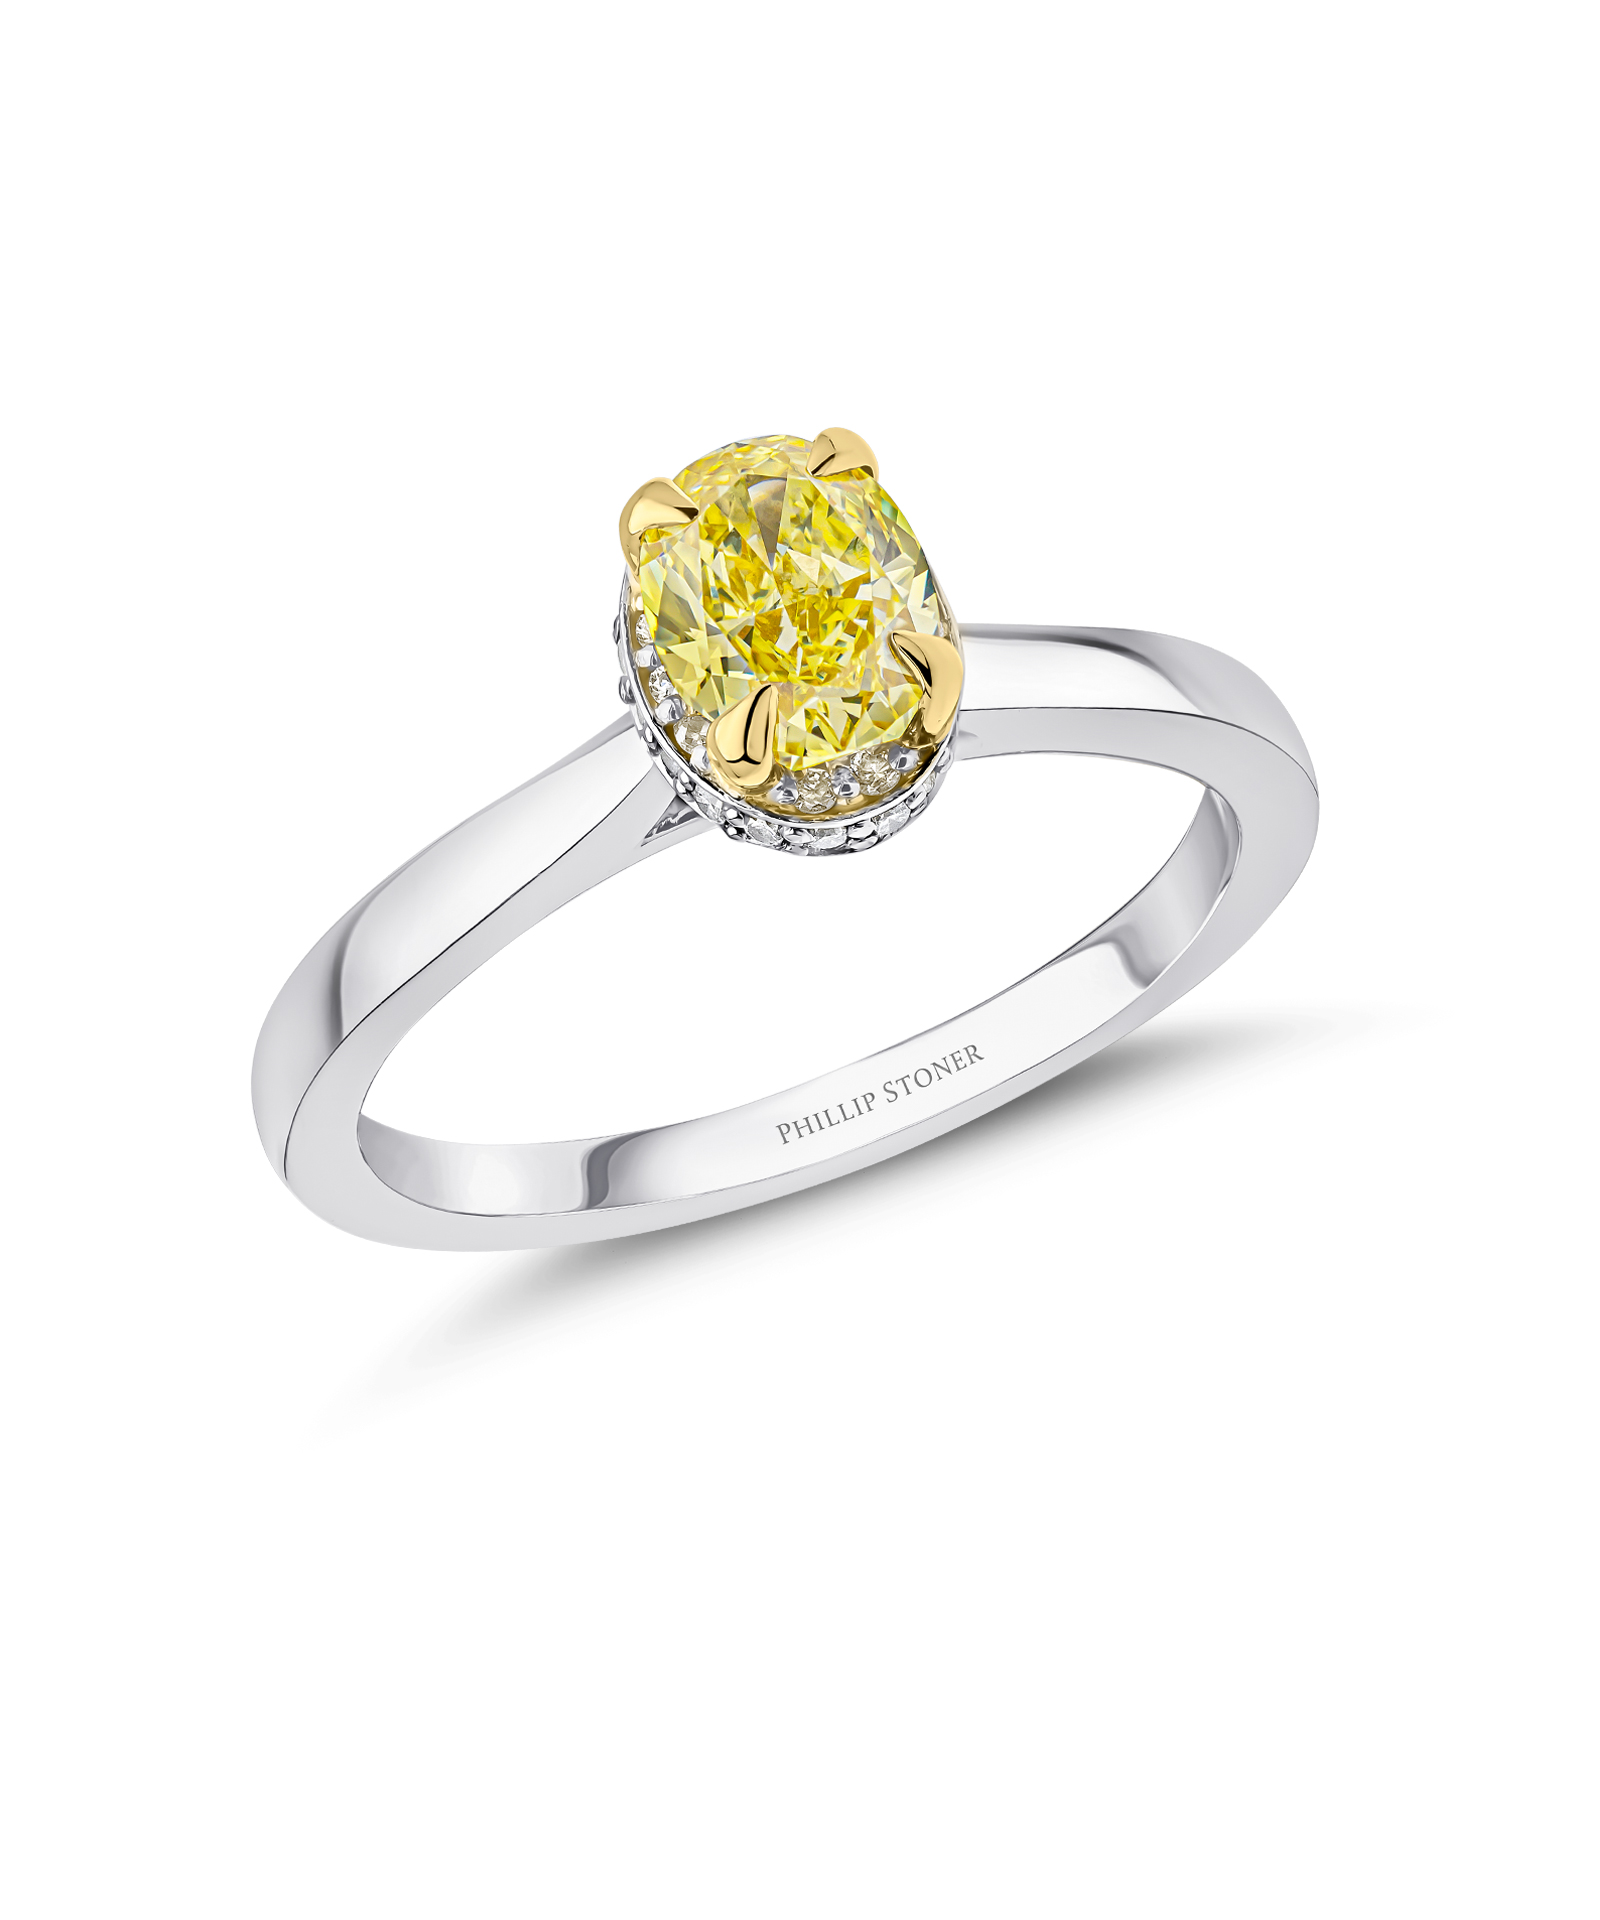 0.70ct Vivid Fancy Yellow Oval Diamond Engagement Ring - Phillip Stoner The Jeweller